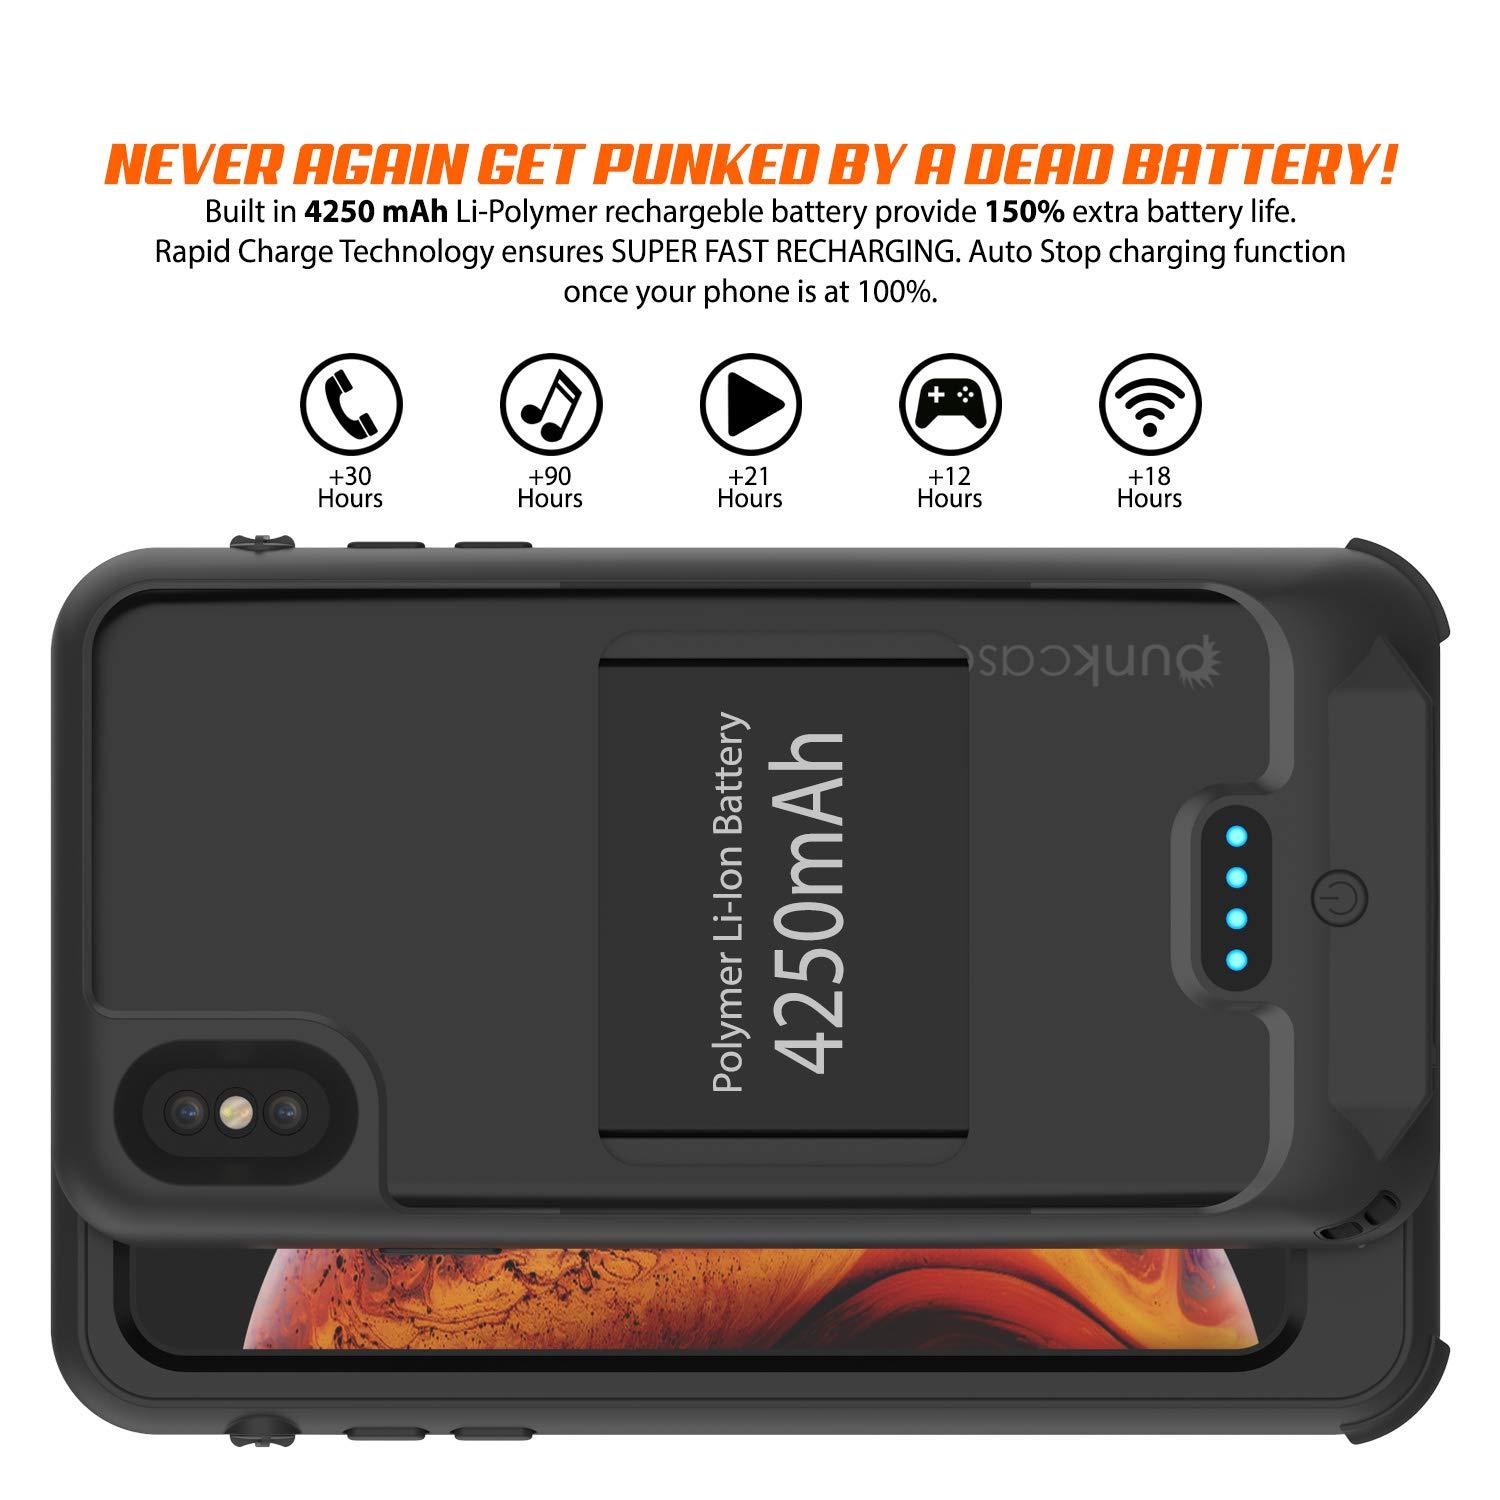 PunkJuice iPhone XS Max Battery Case, Waterproof, IP68 Certified [Ultr –  punkcase